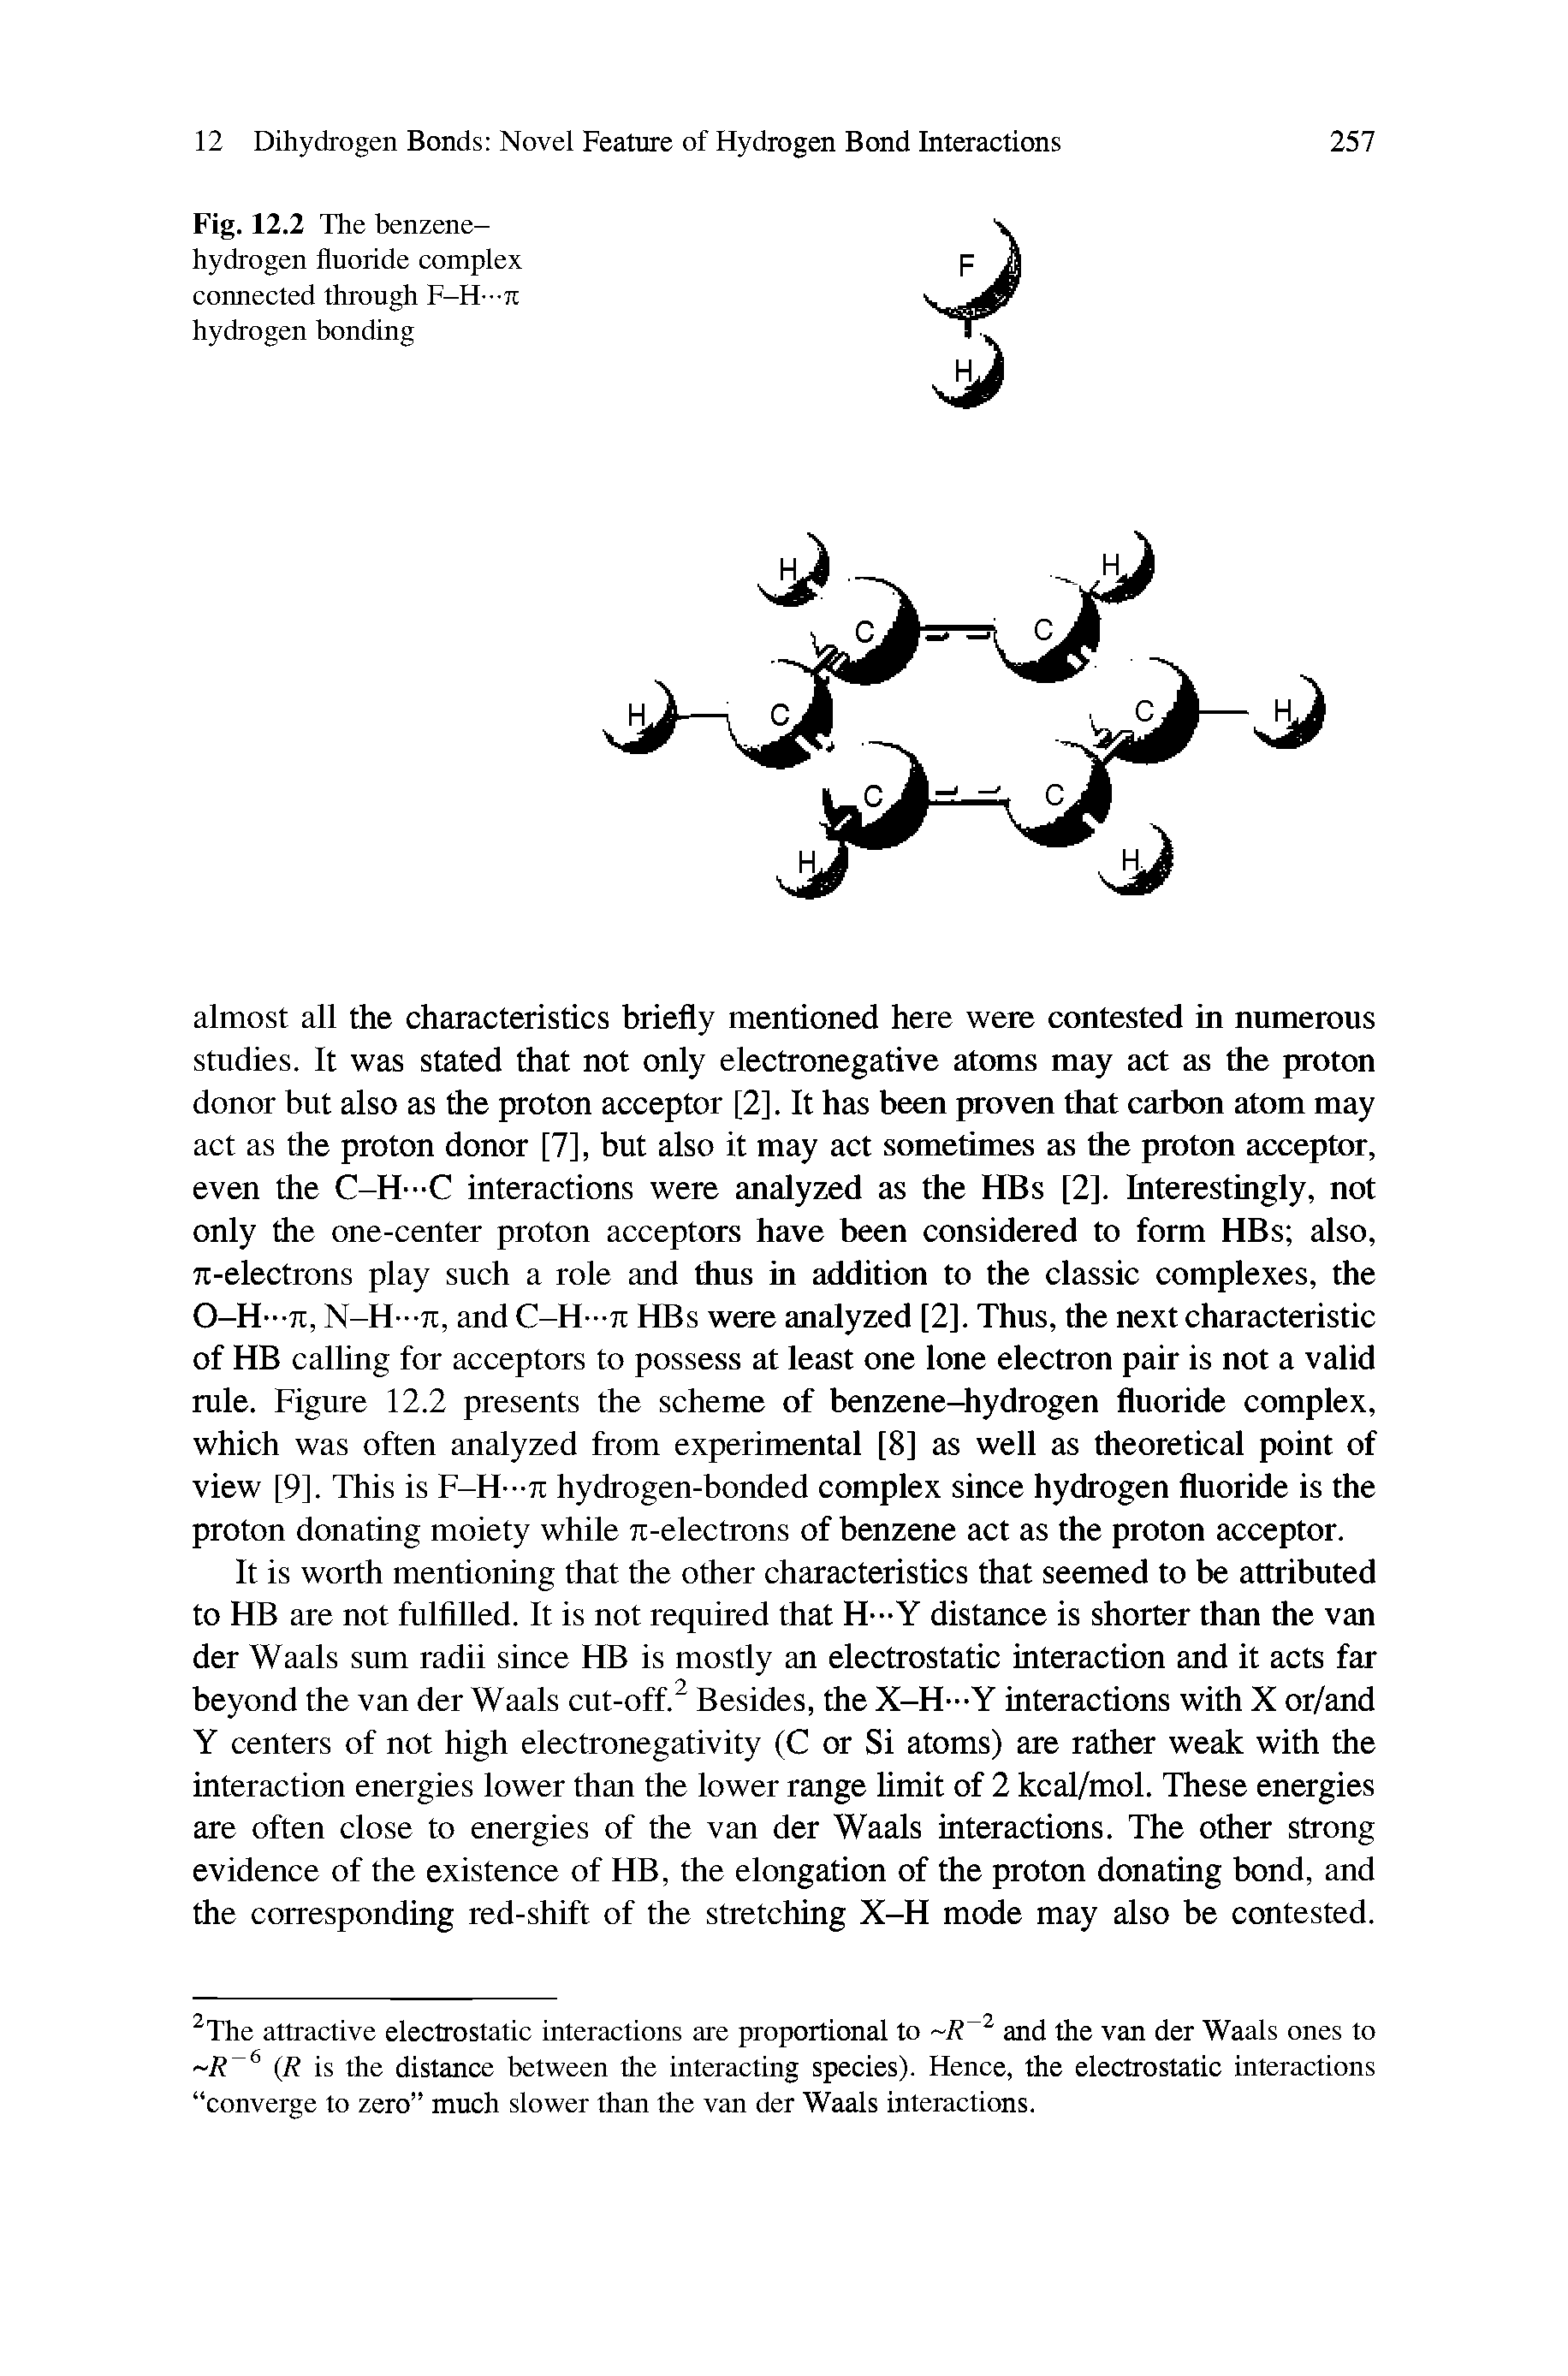 Fig. 12.2 The benzene-hydrogen fluoride complex connected through F-H—tt hydrogen bonding...